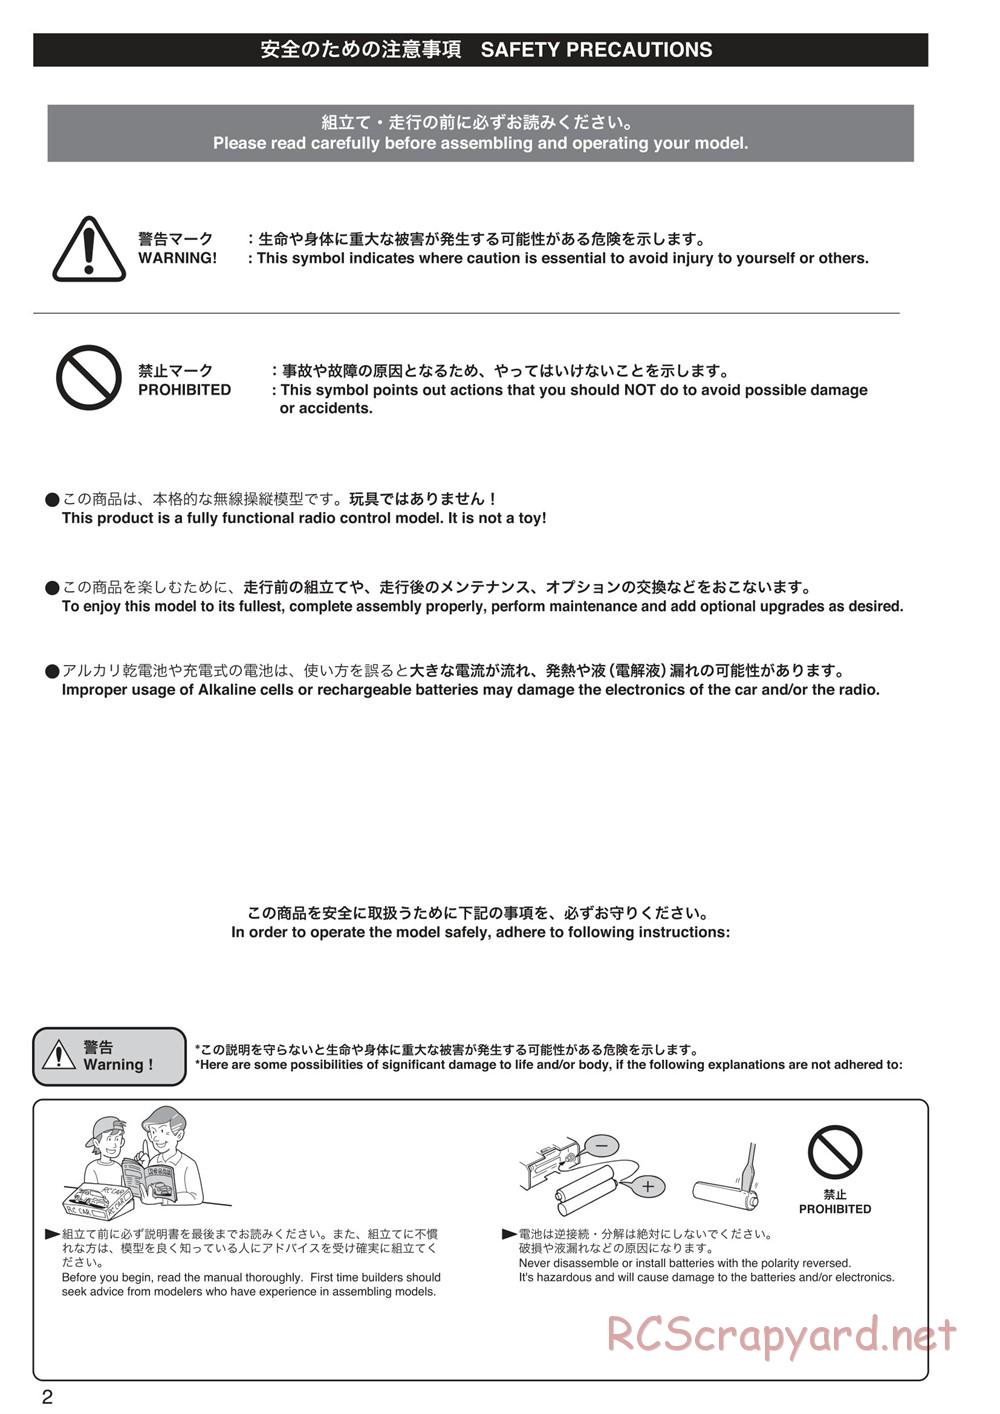 Kyosho - Inferno MP9 TKI3 - Manual - Page 2